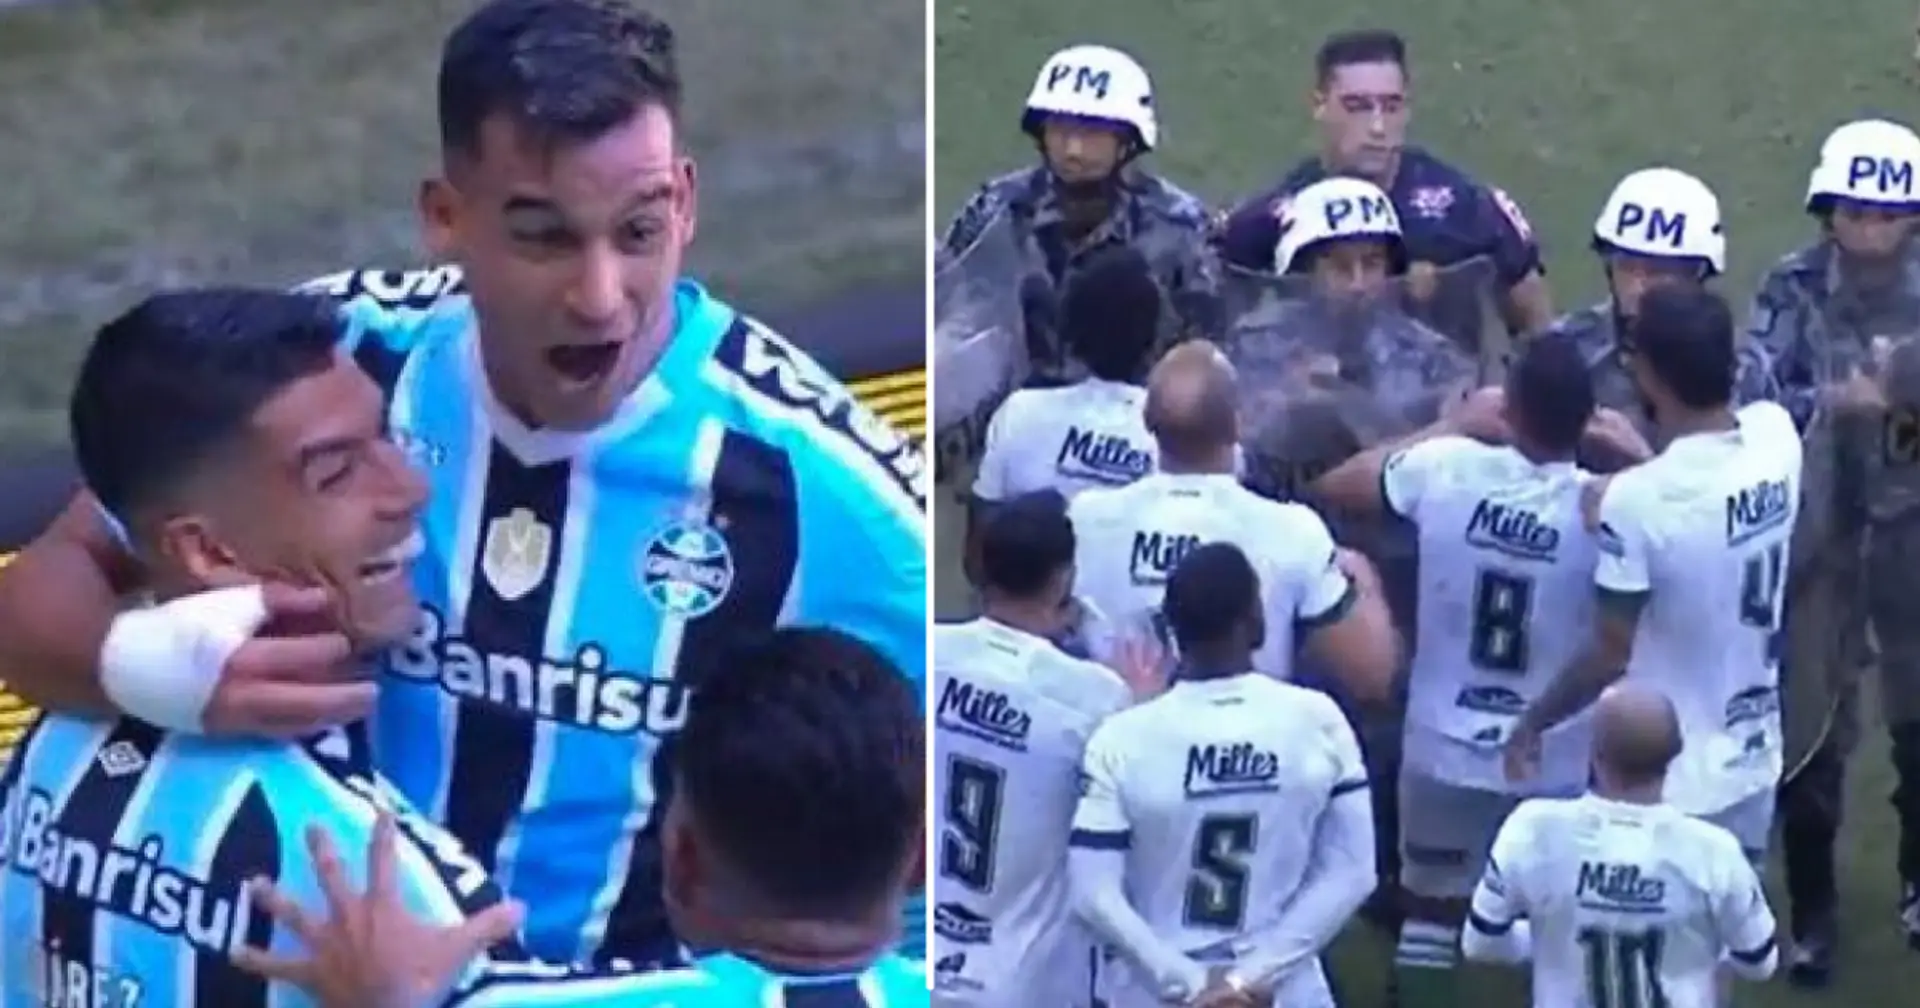 Luis Suarez provokes massive brawl, soldiers intervene to break up clash